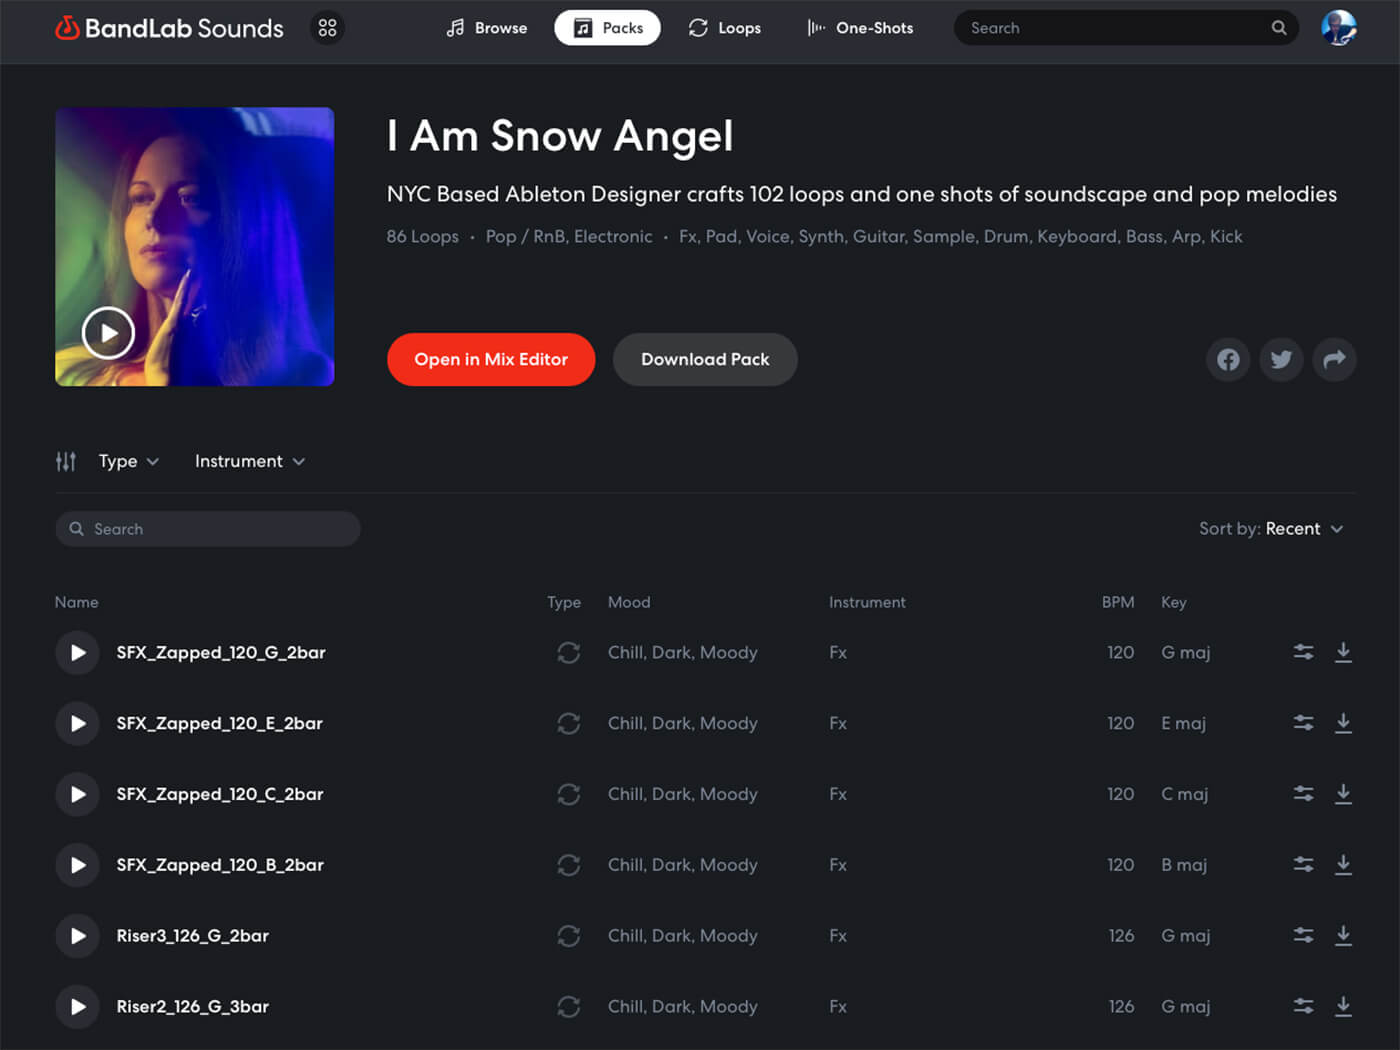 BandLab Sounds - I Am Snow Angel